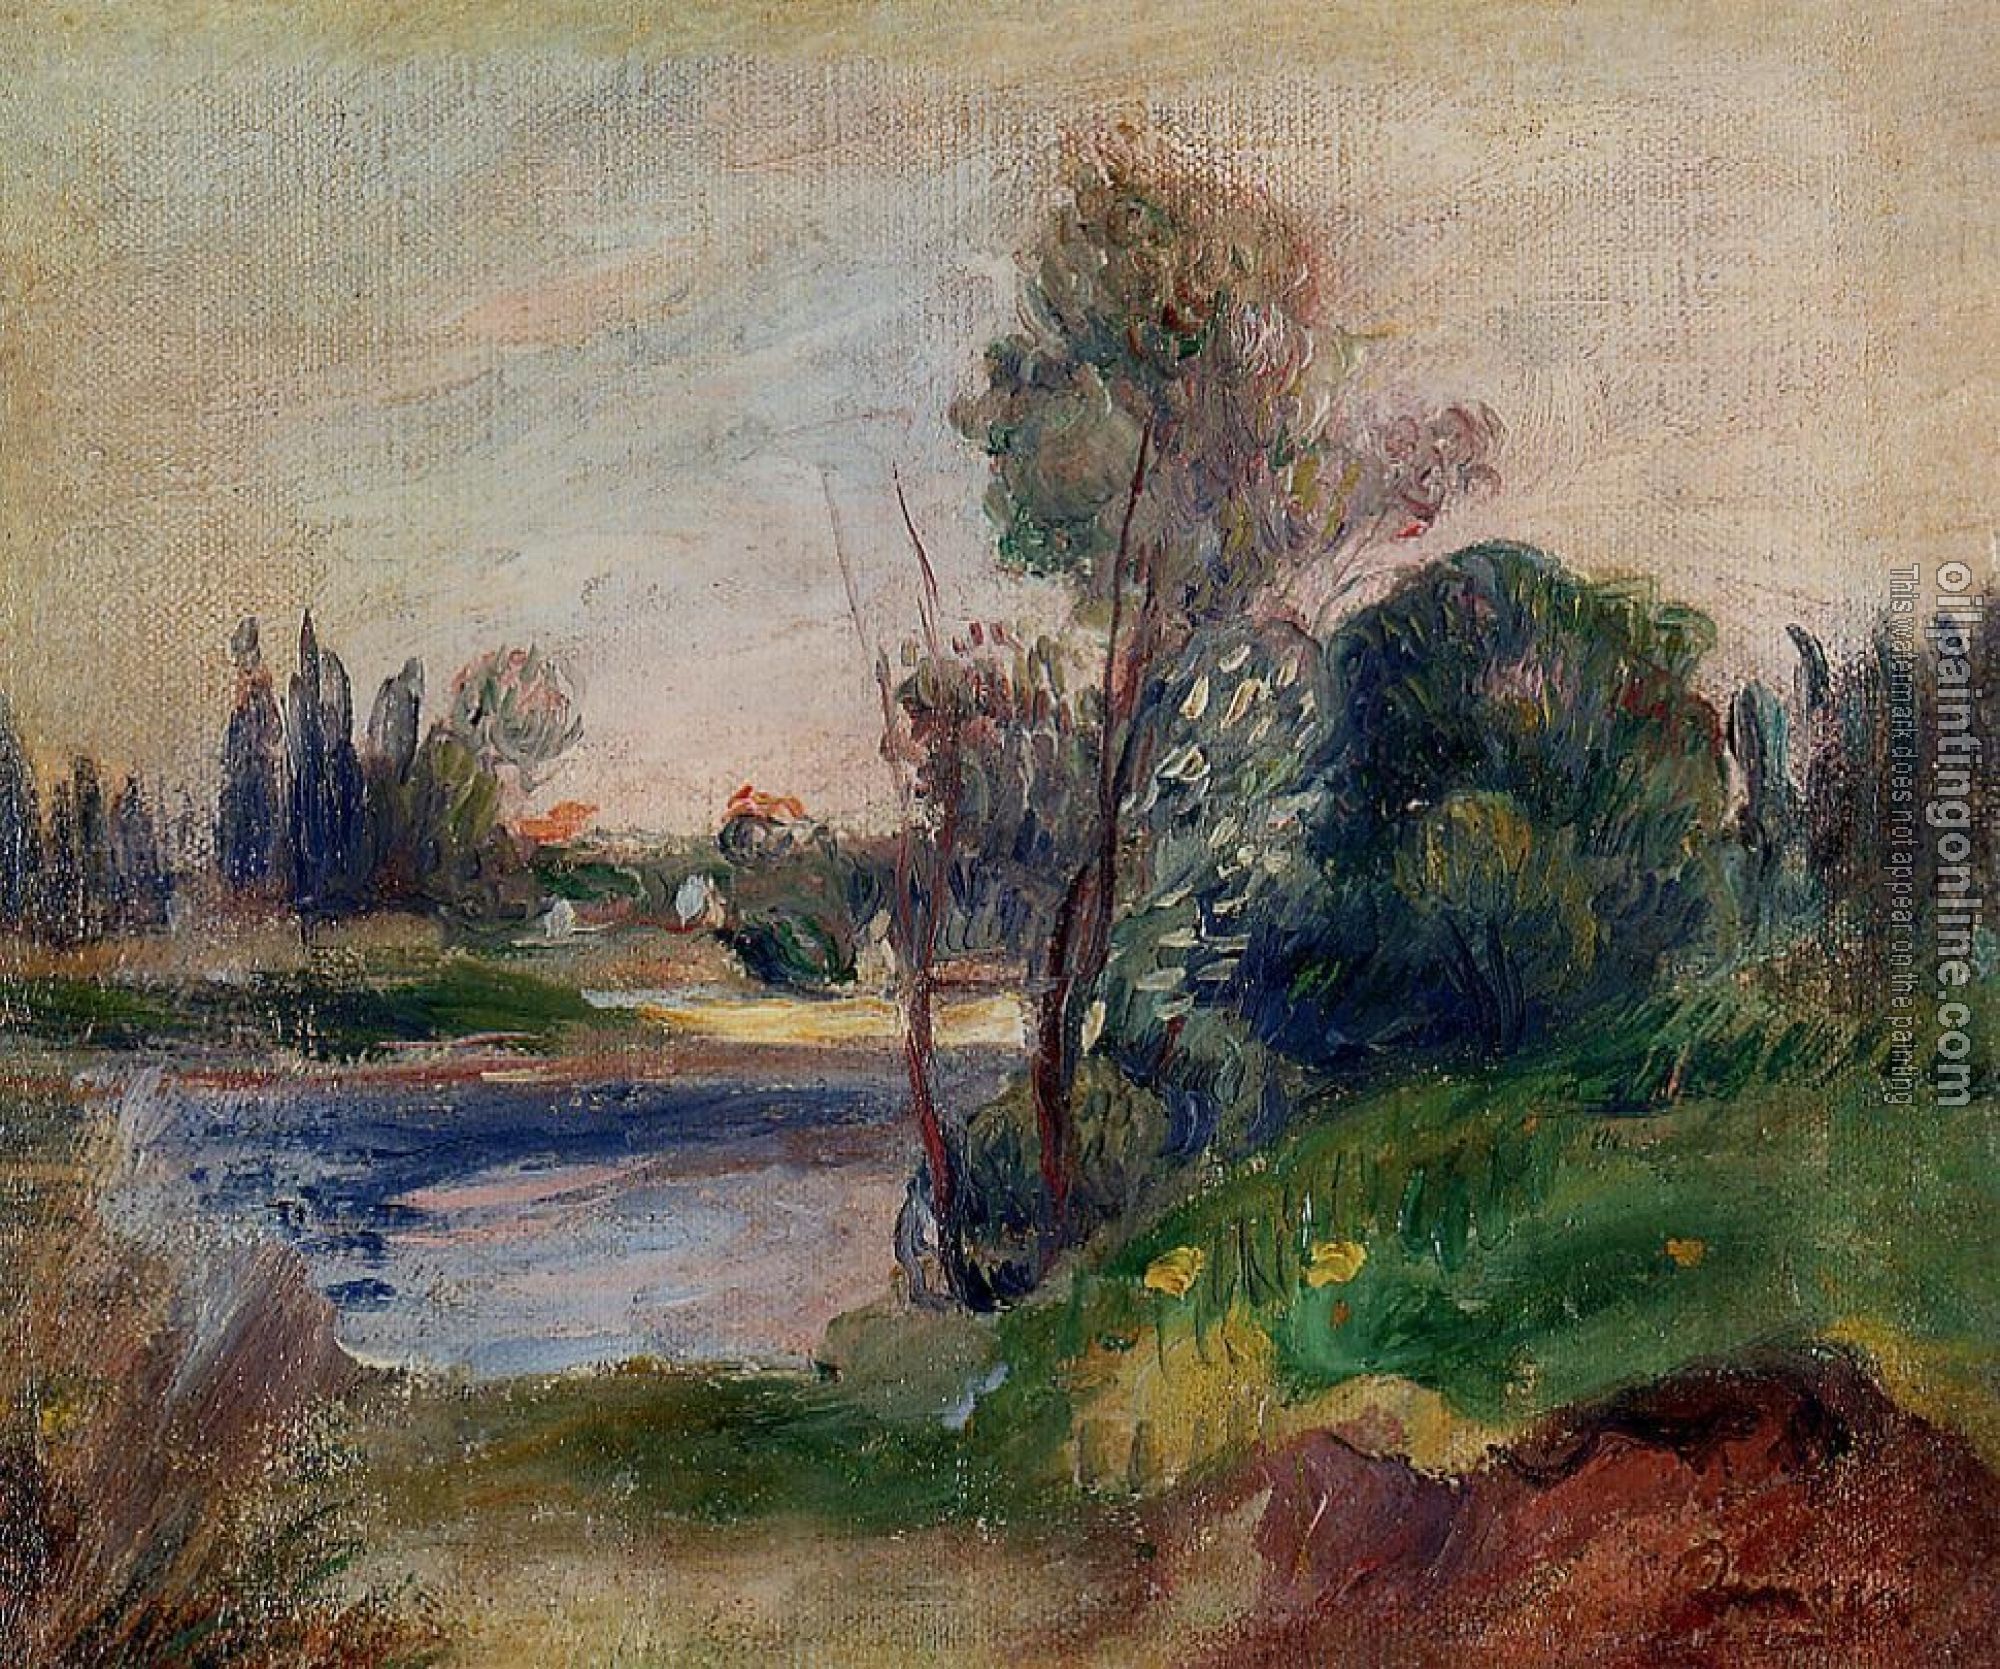 Renoir, Pierre Auguste - Banks of a River